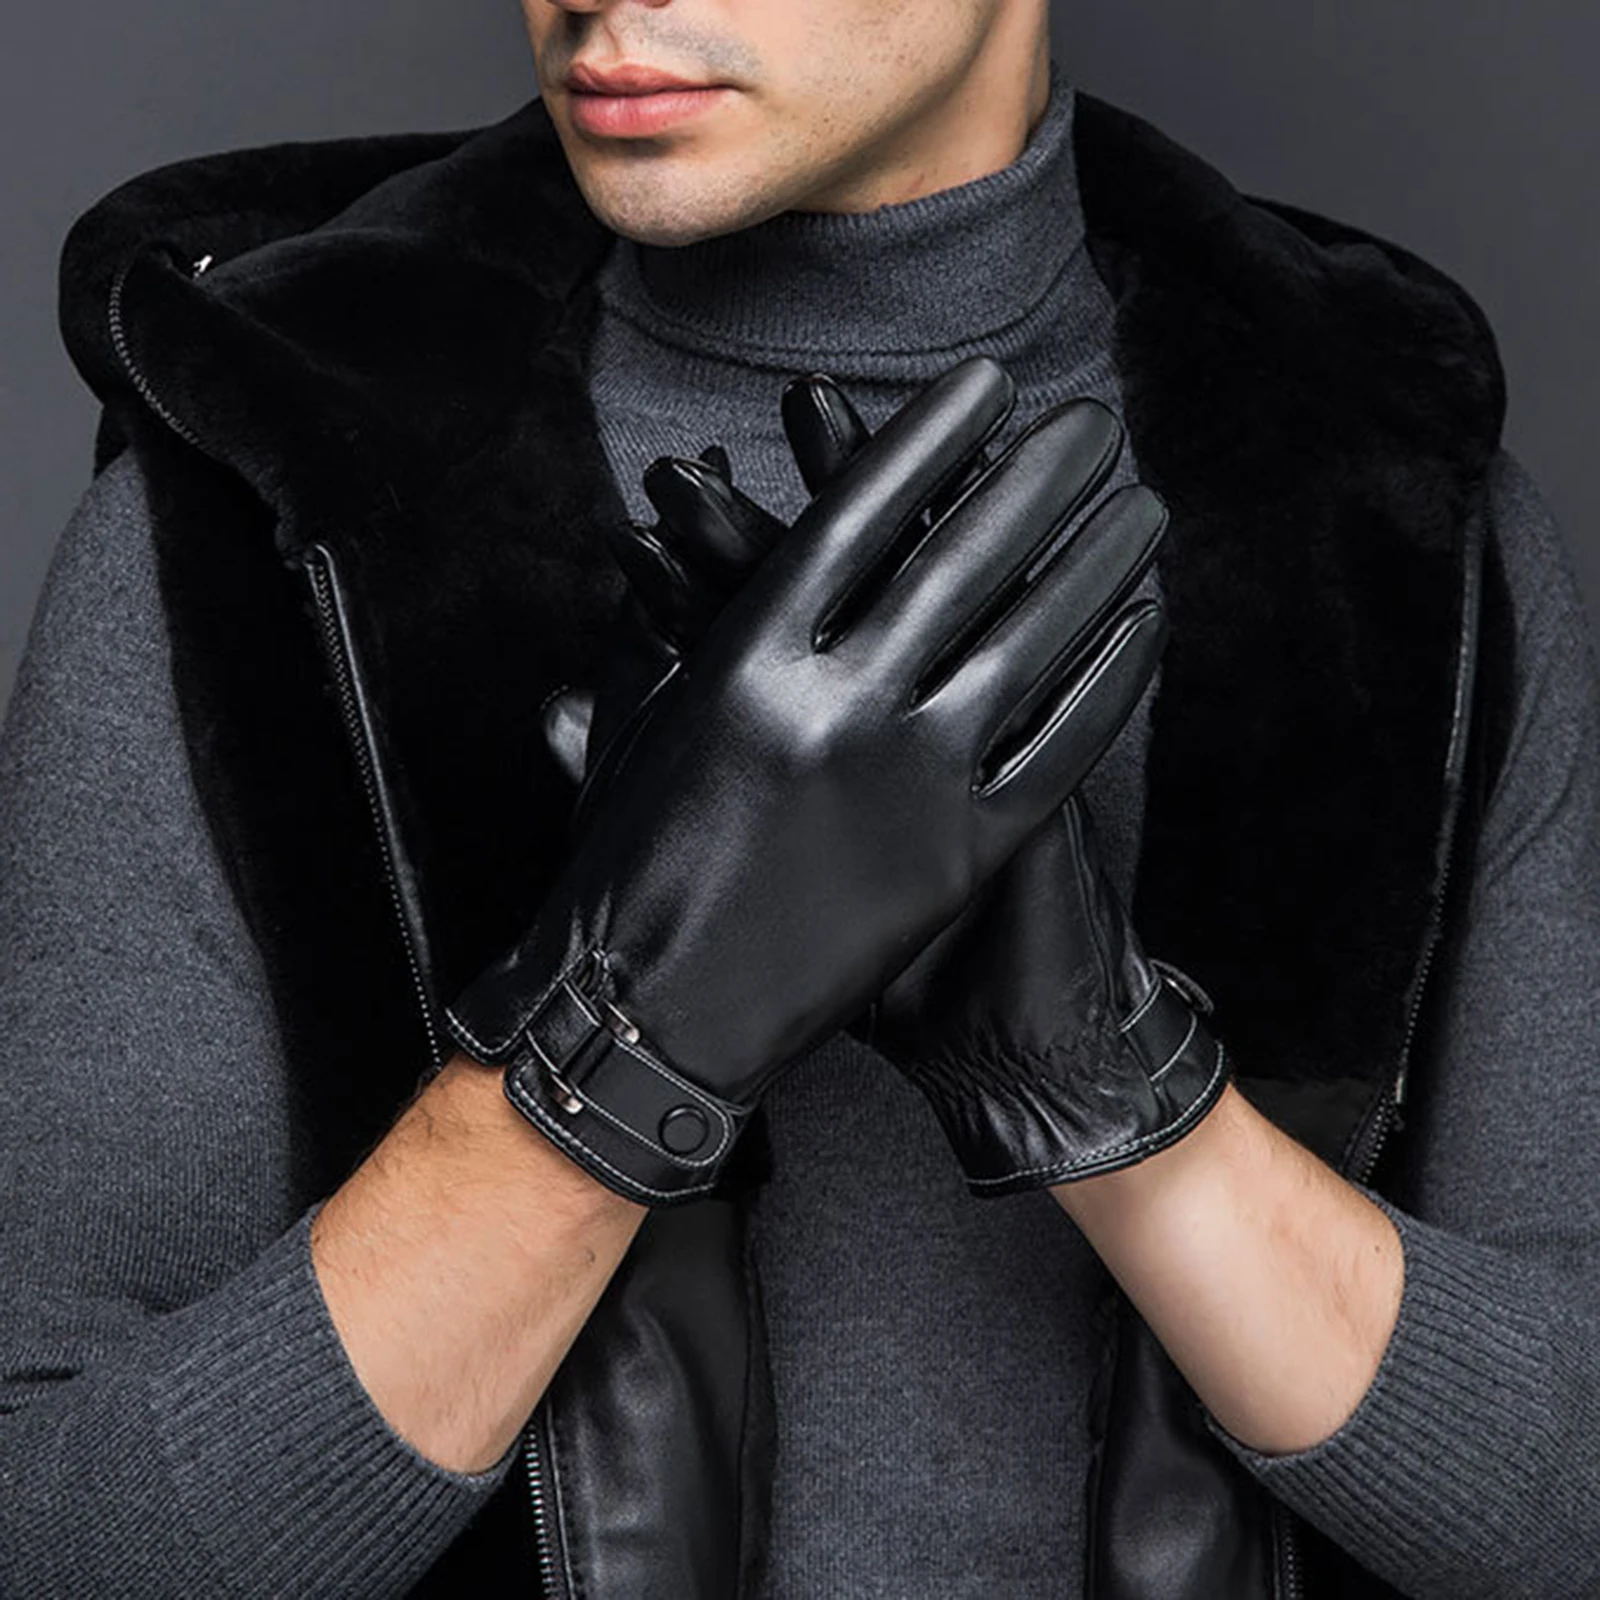 Waterproof Winter Gloves Driving Running Touch Screen Warm Gloves Black